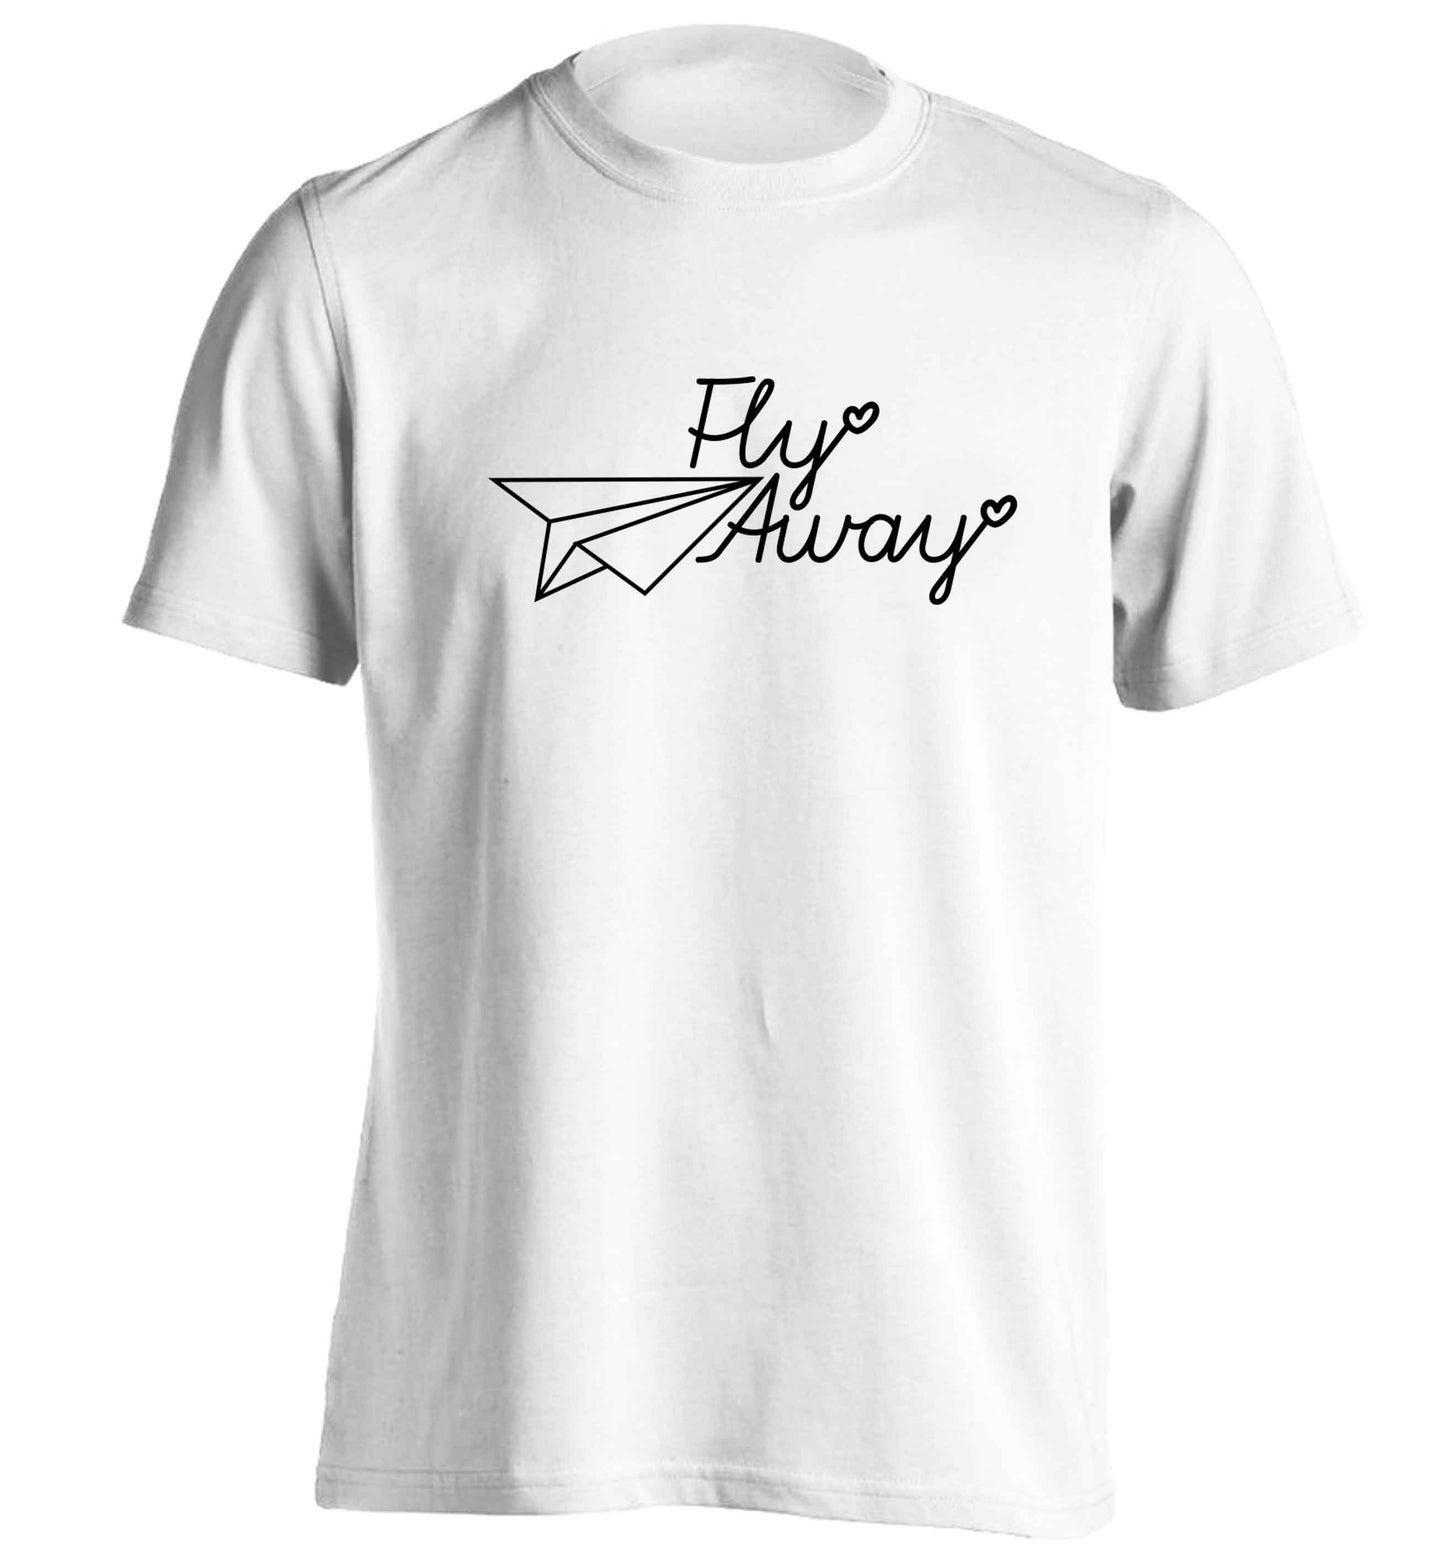 Fly away adults unisex white Tshirt 2XL